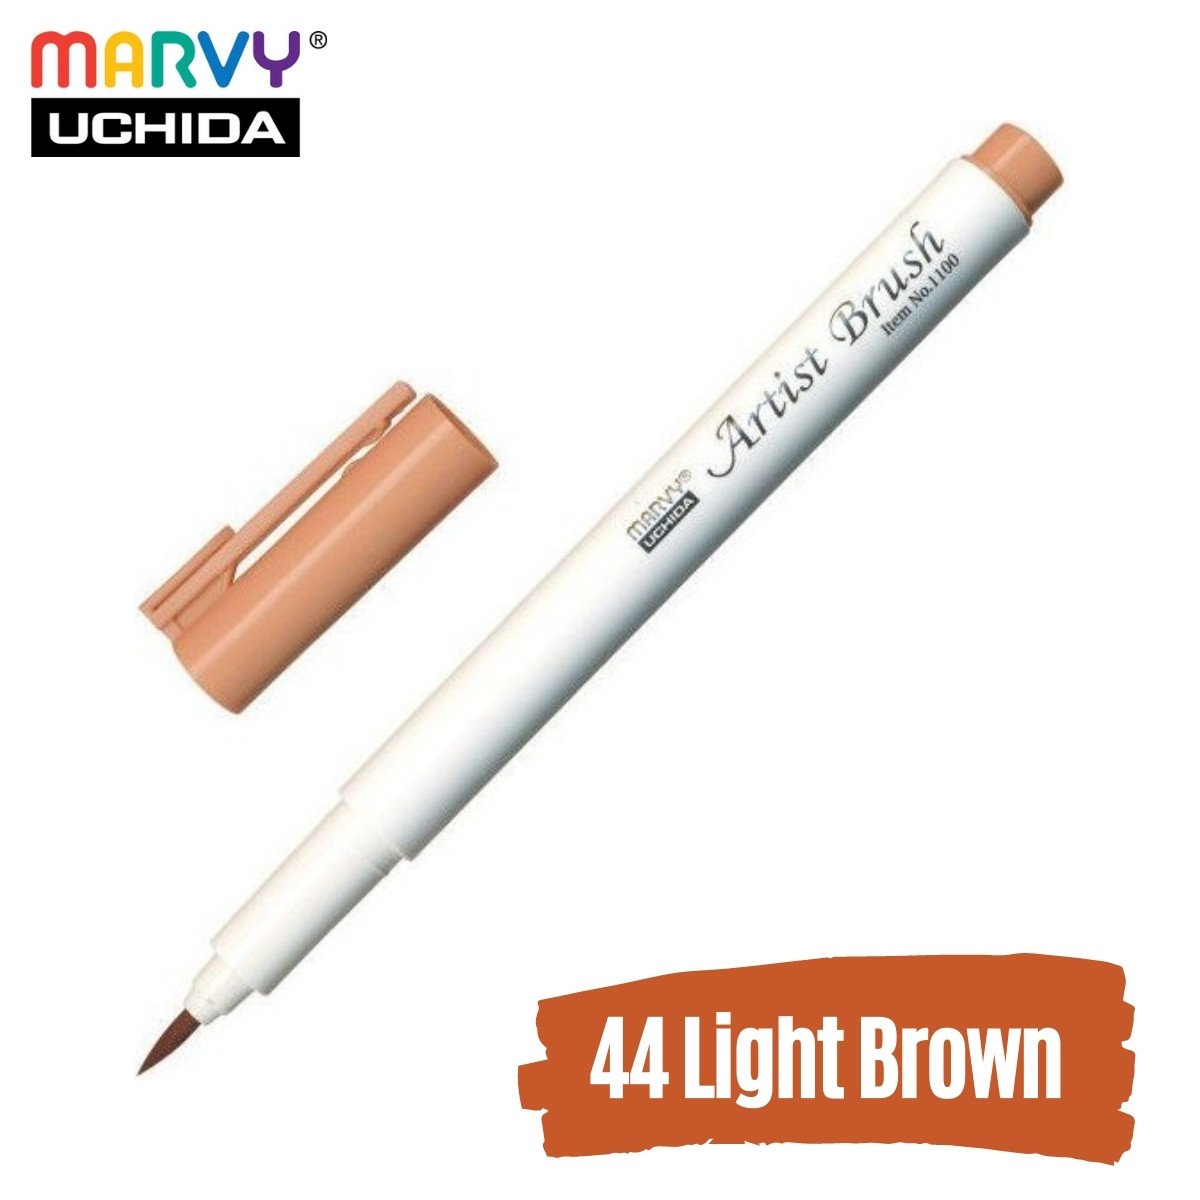 Marvy Artist Brush Pen 1100 Firça Uçlu Kalem 44 Light Brown